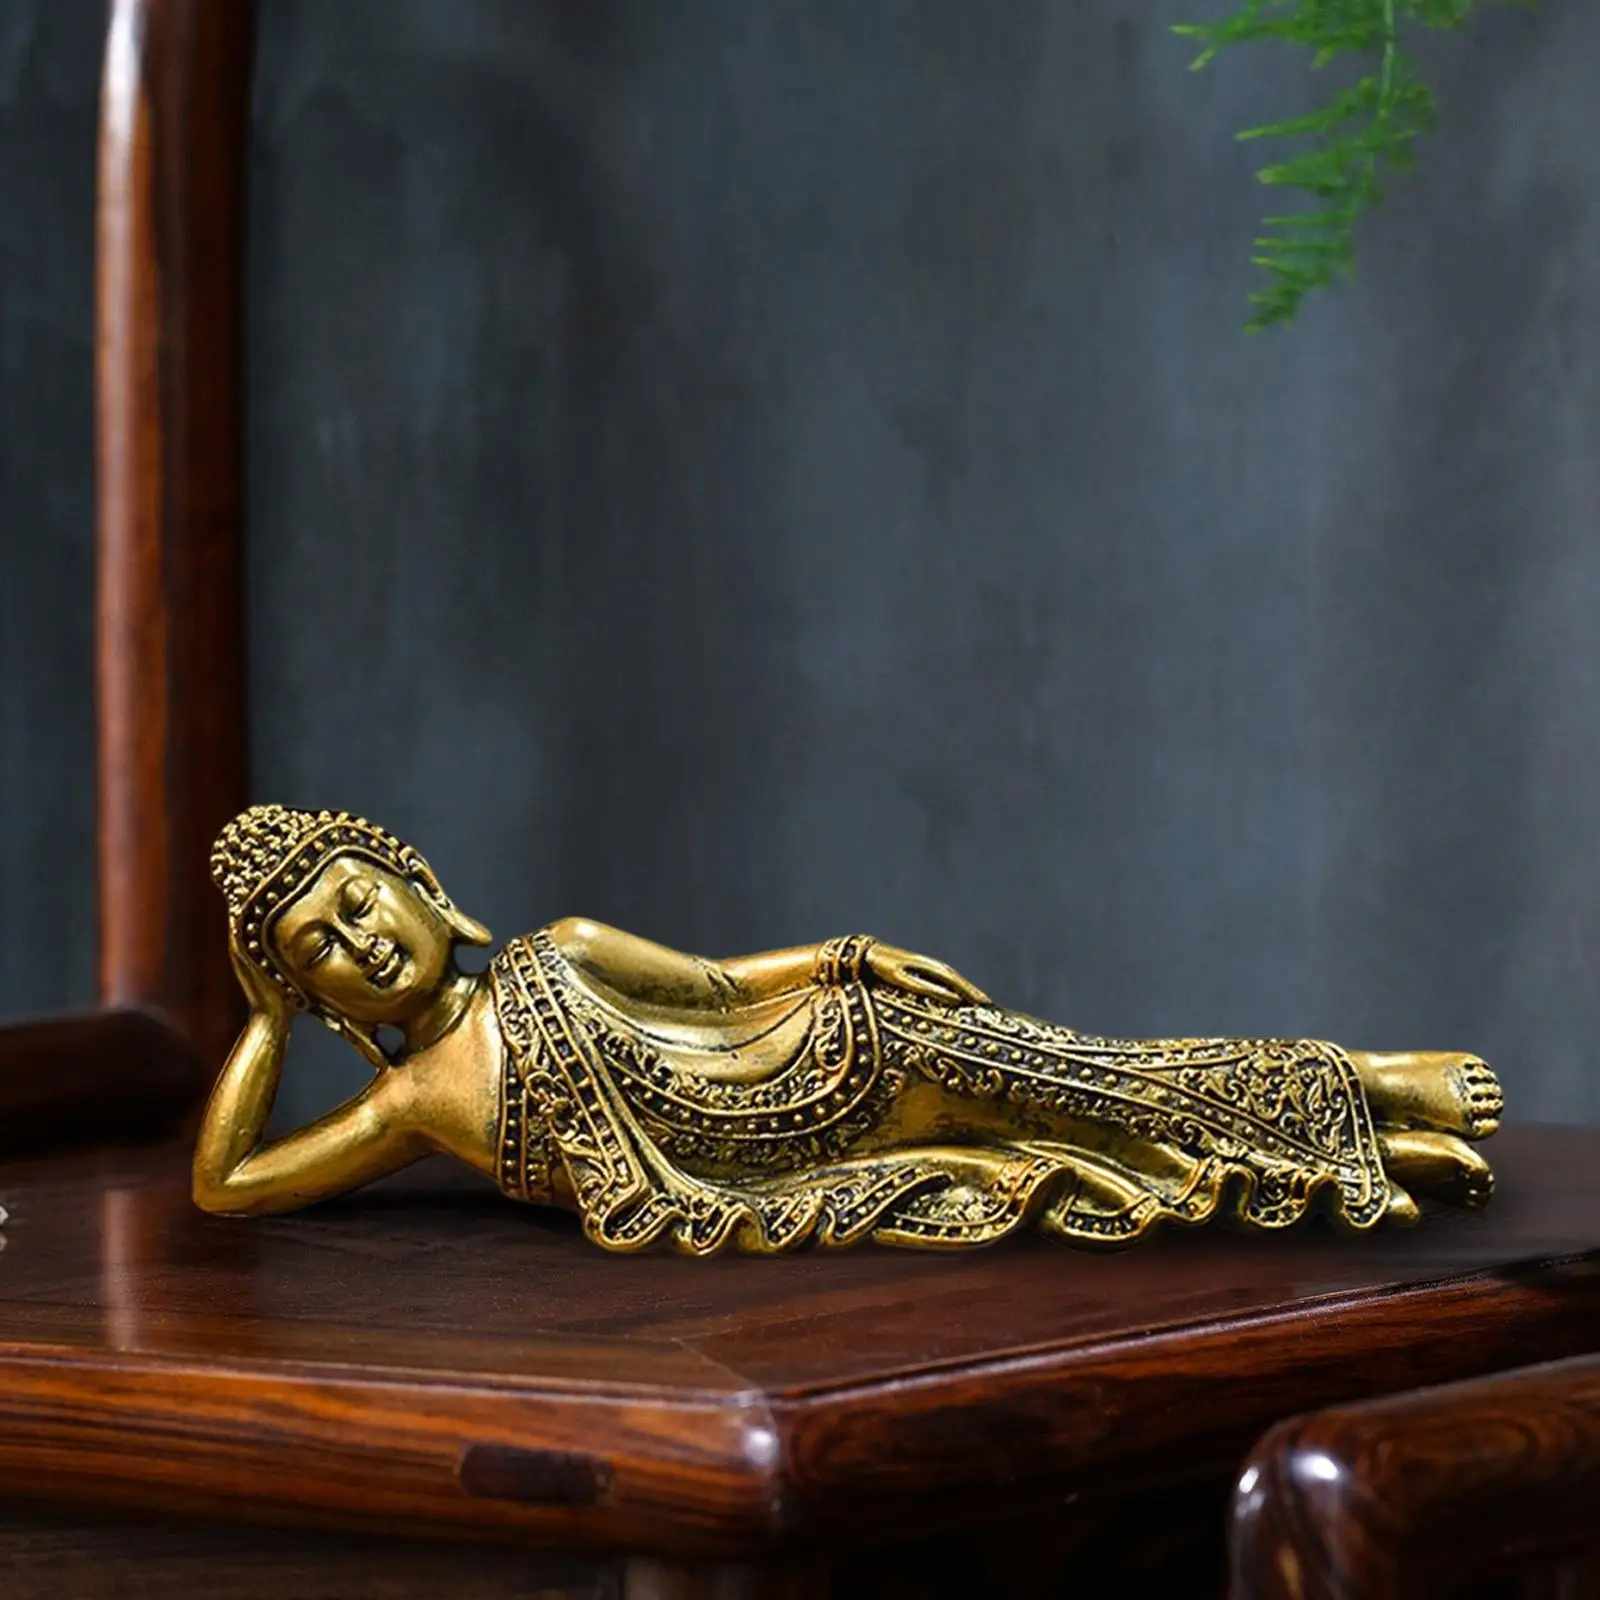 Vintage Style Buddha Figurine Statue Sculpture Decorative Ornament Artwork Gift for Desk Car Interior Outdoor Living Room Decor